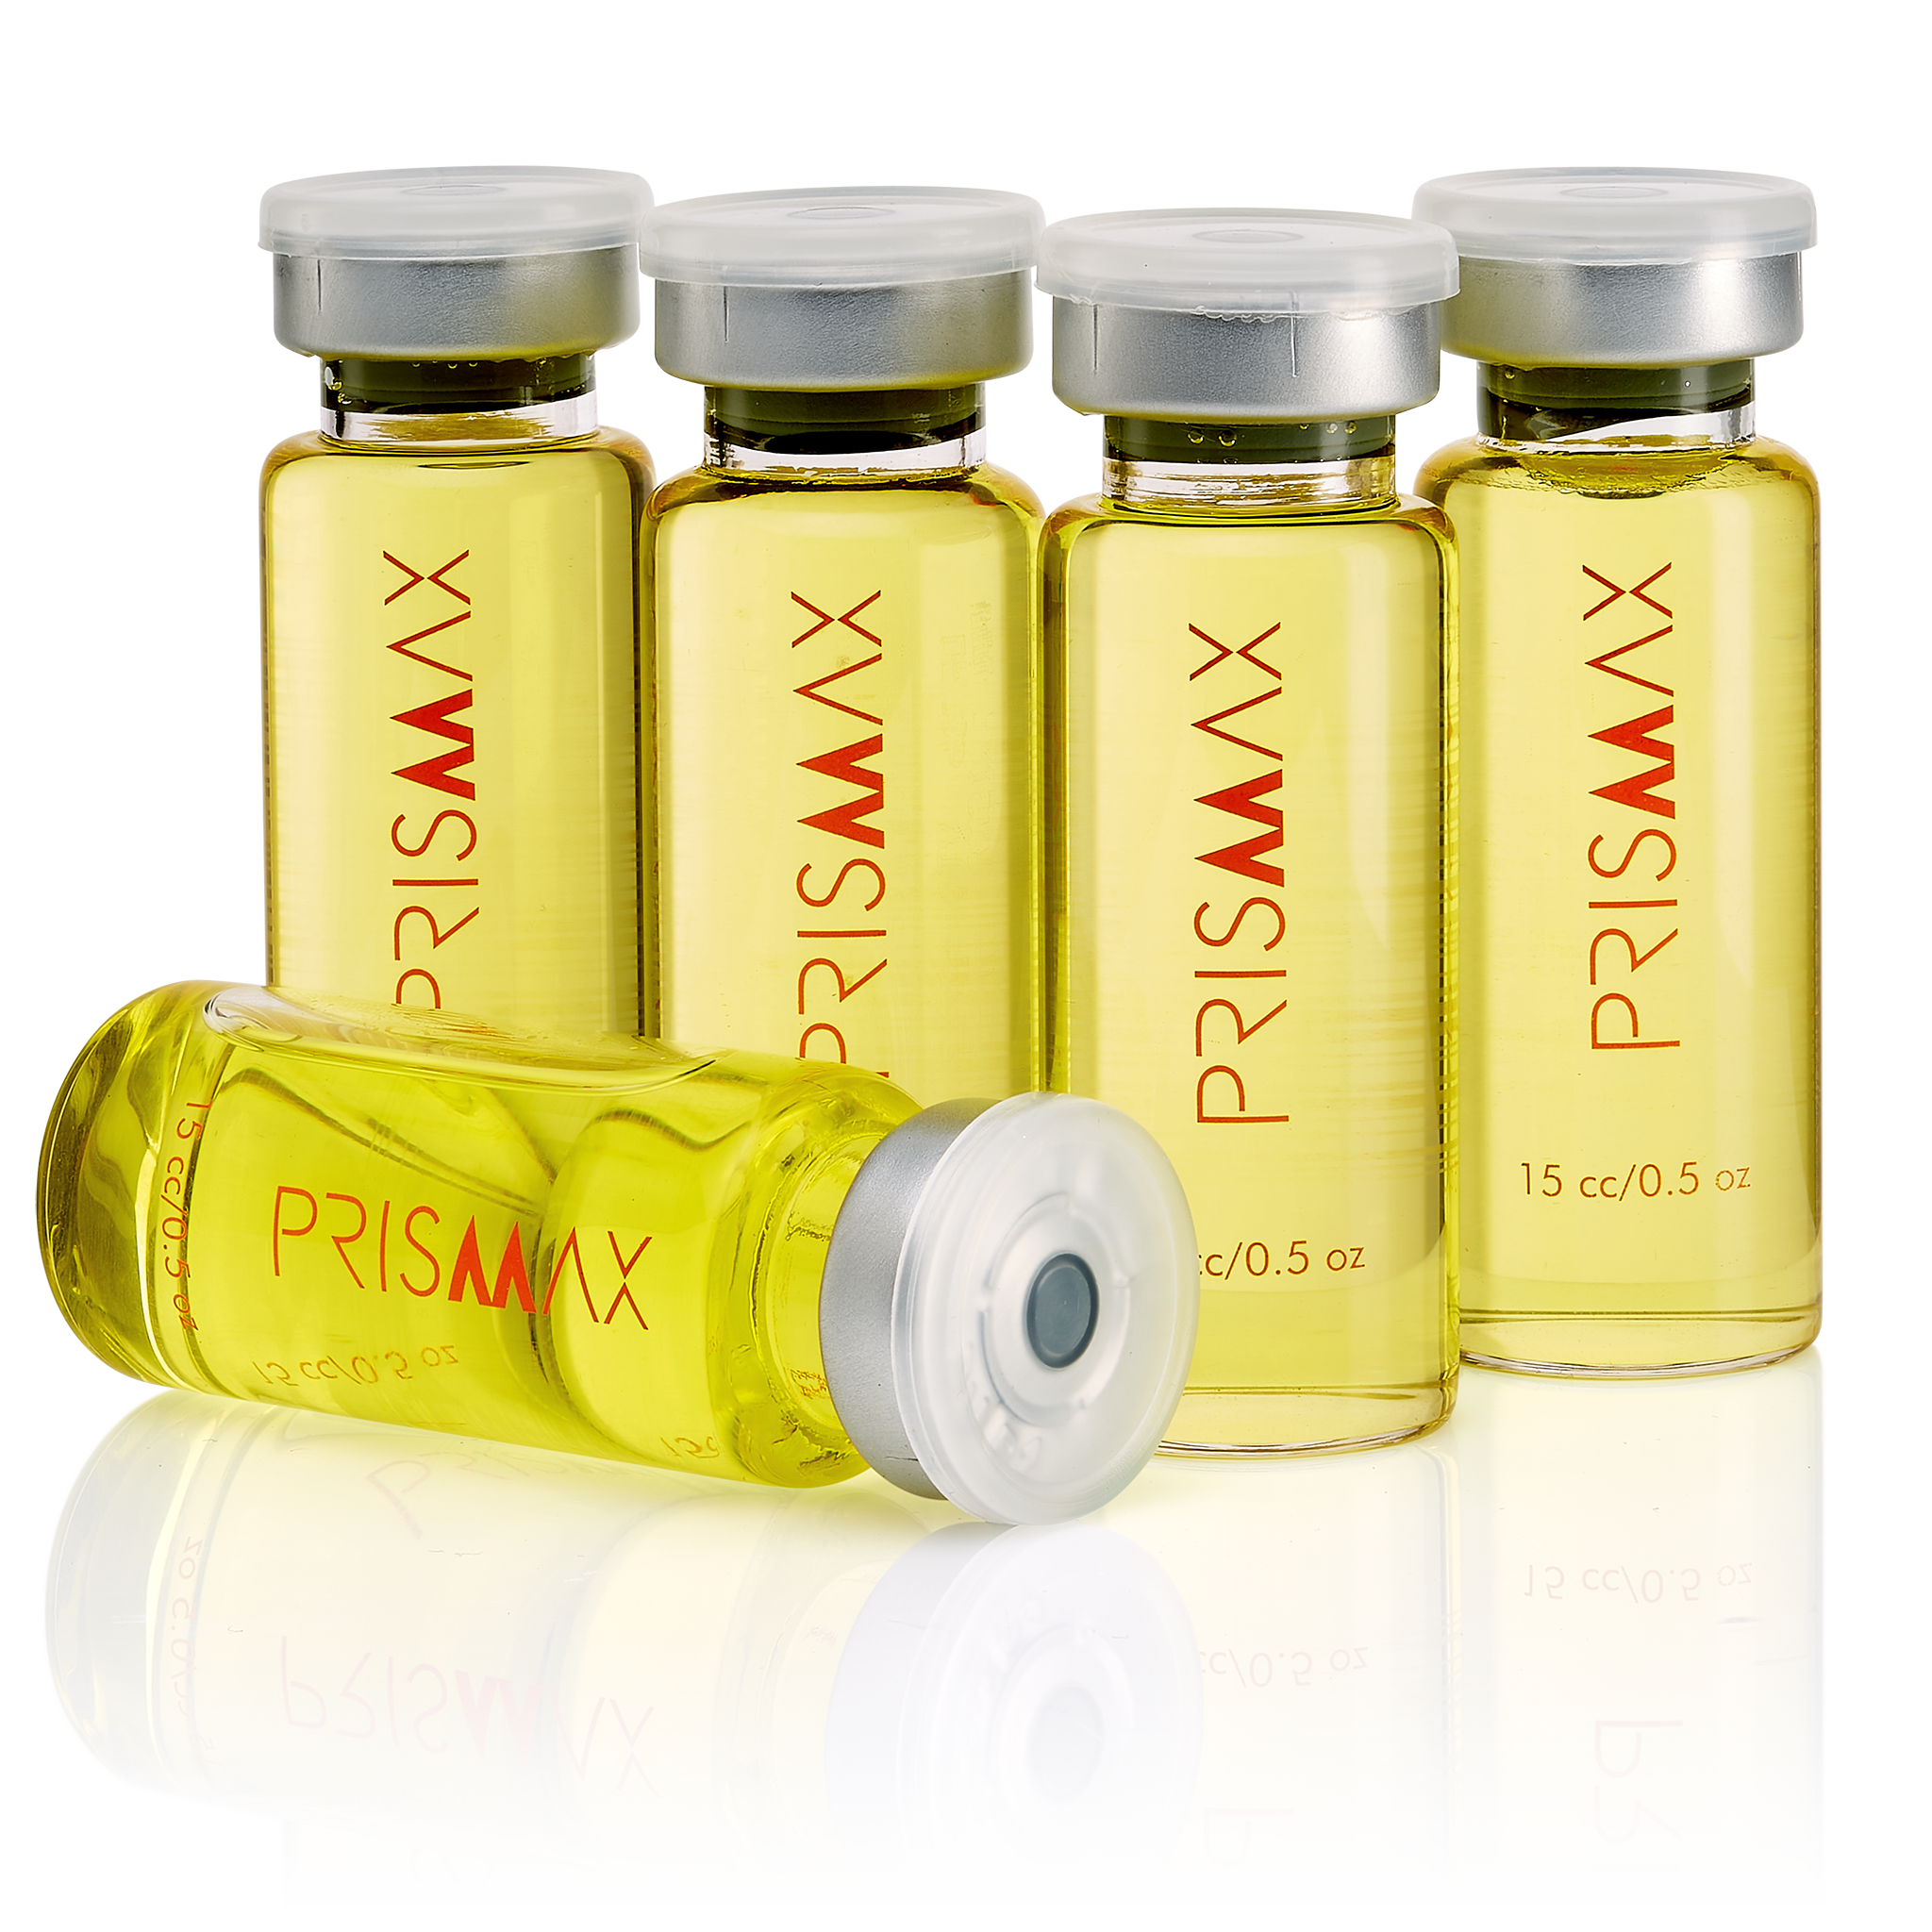 Prismax Nutritivo Hair Botox - 5 Treatments